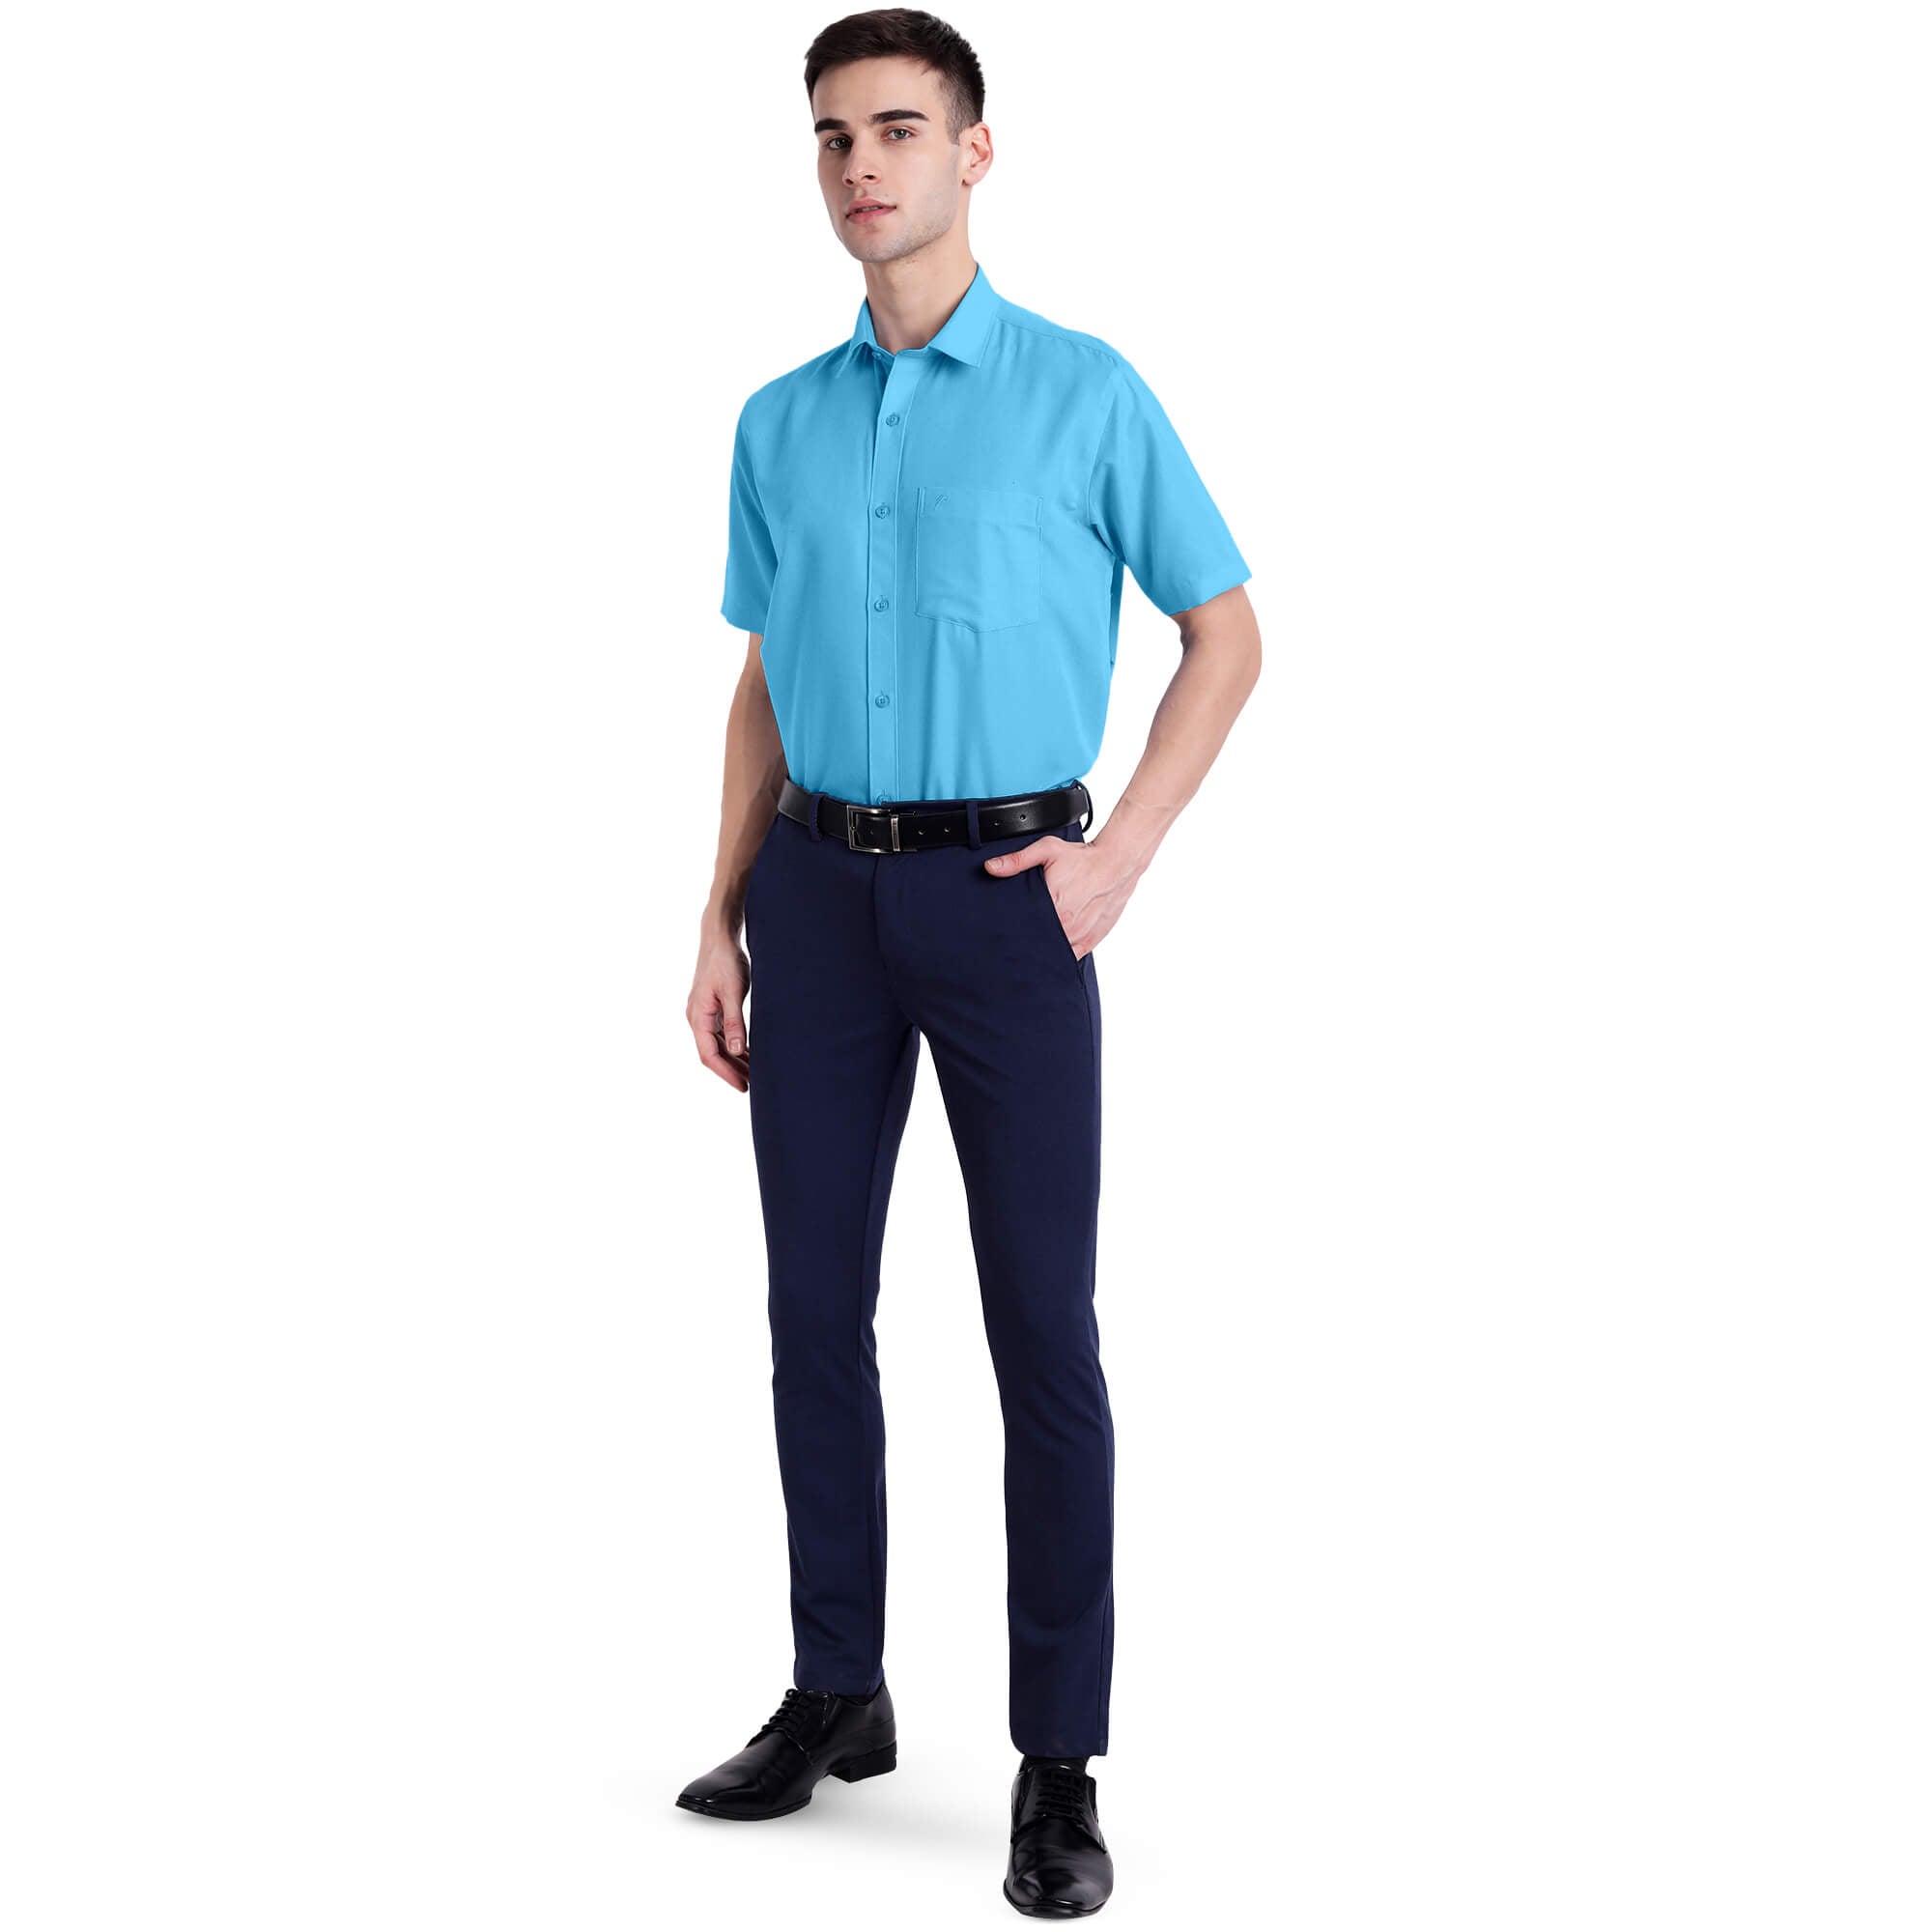 Poomer Elite Colour Shirt - Blue